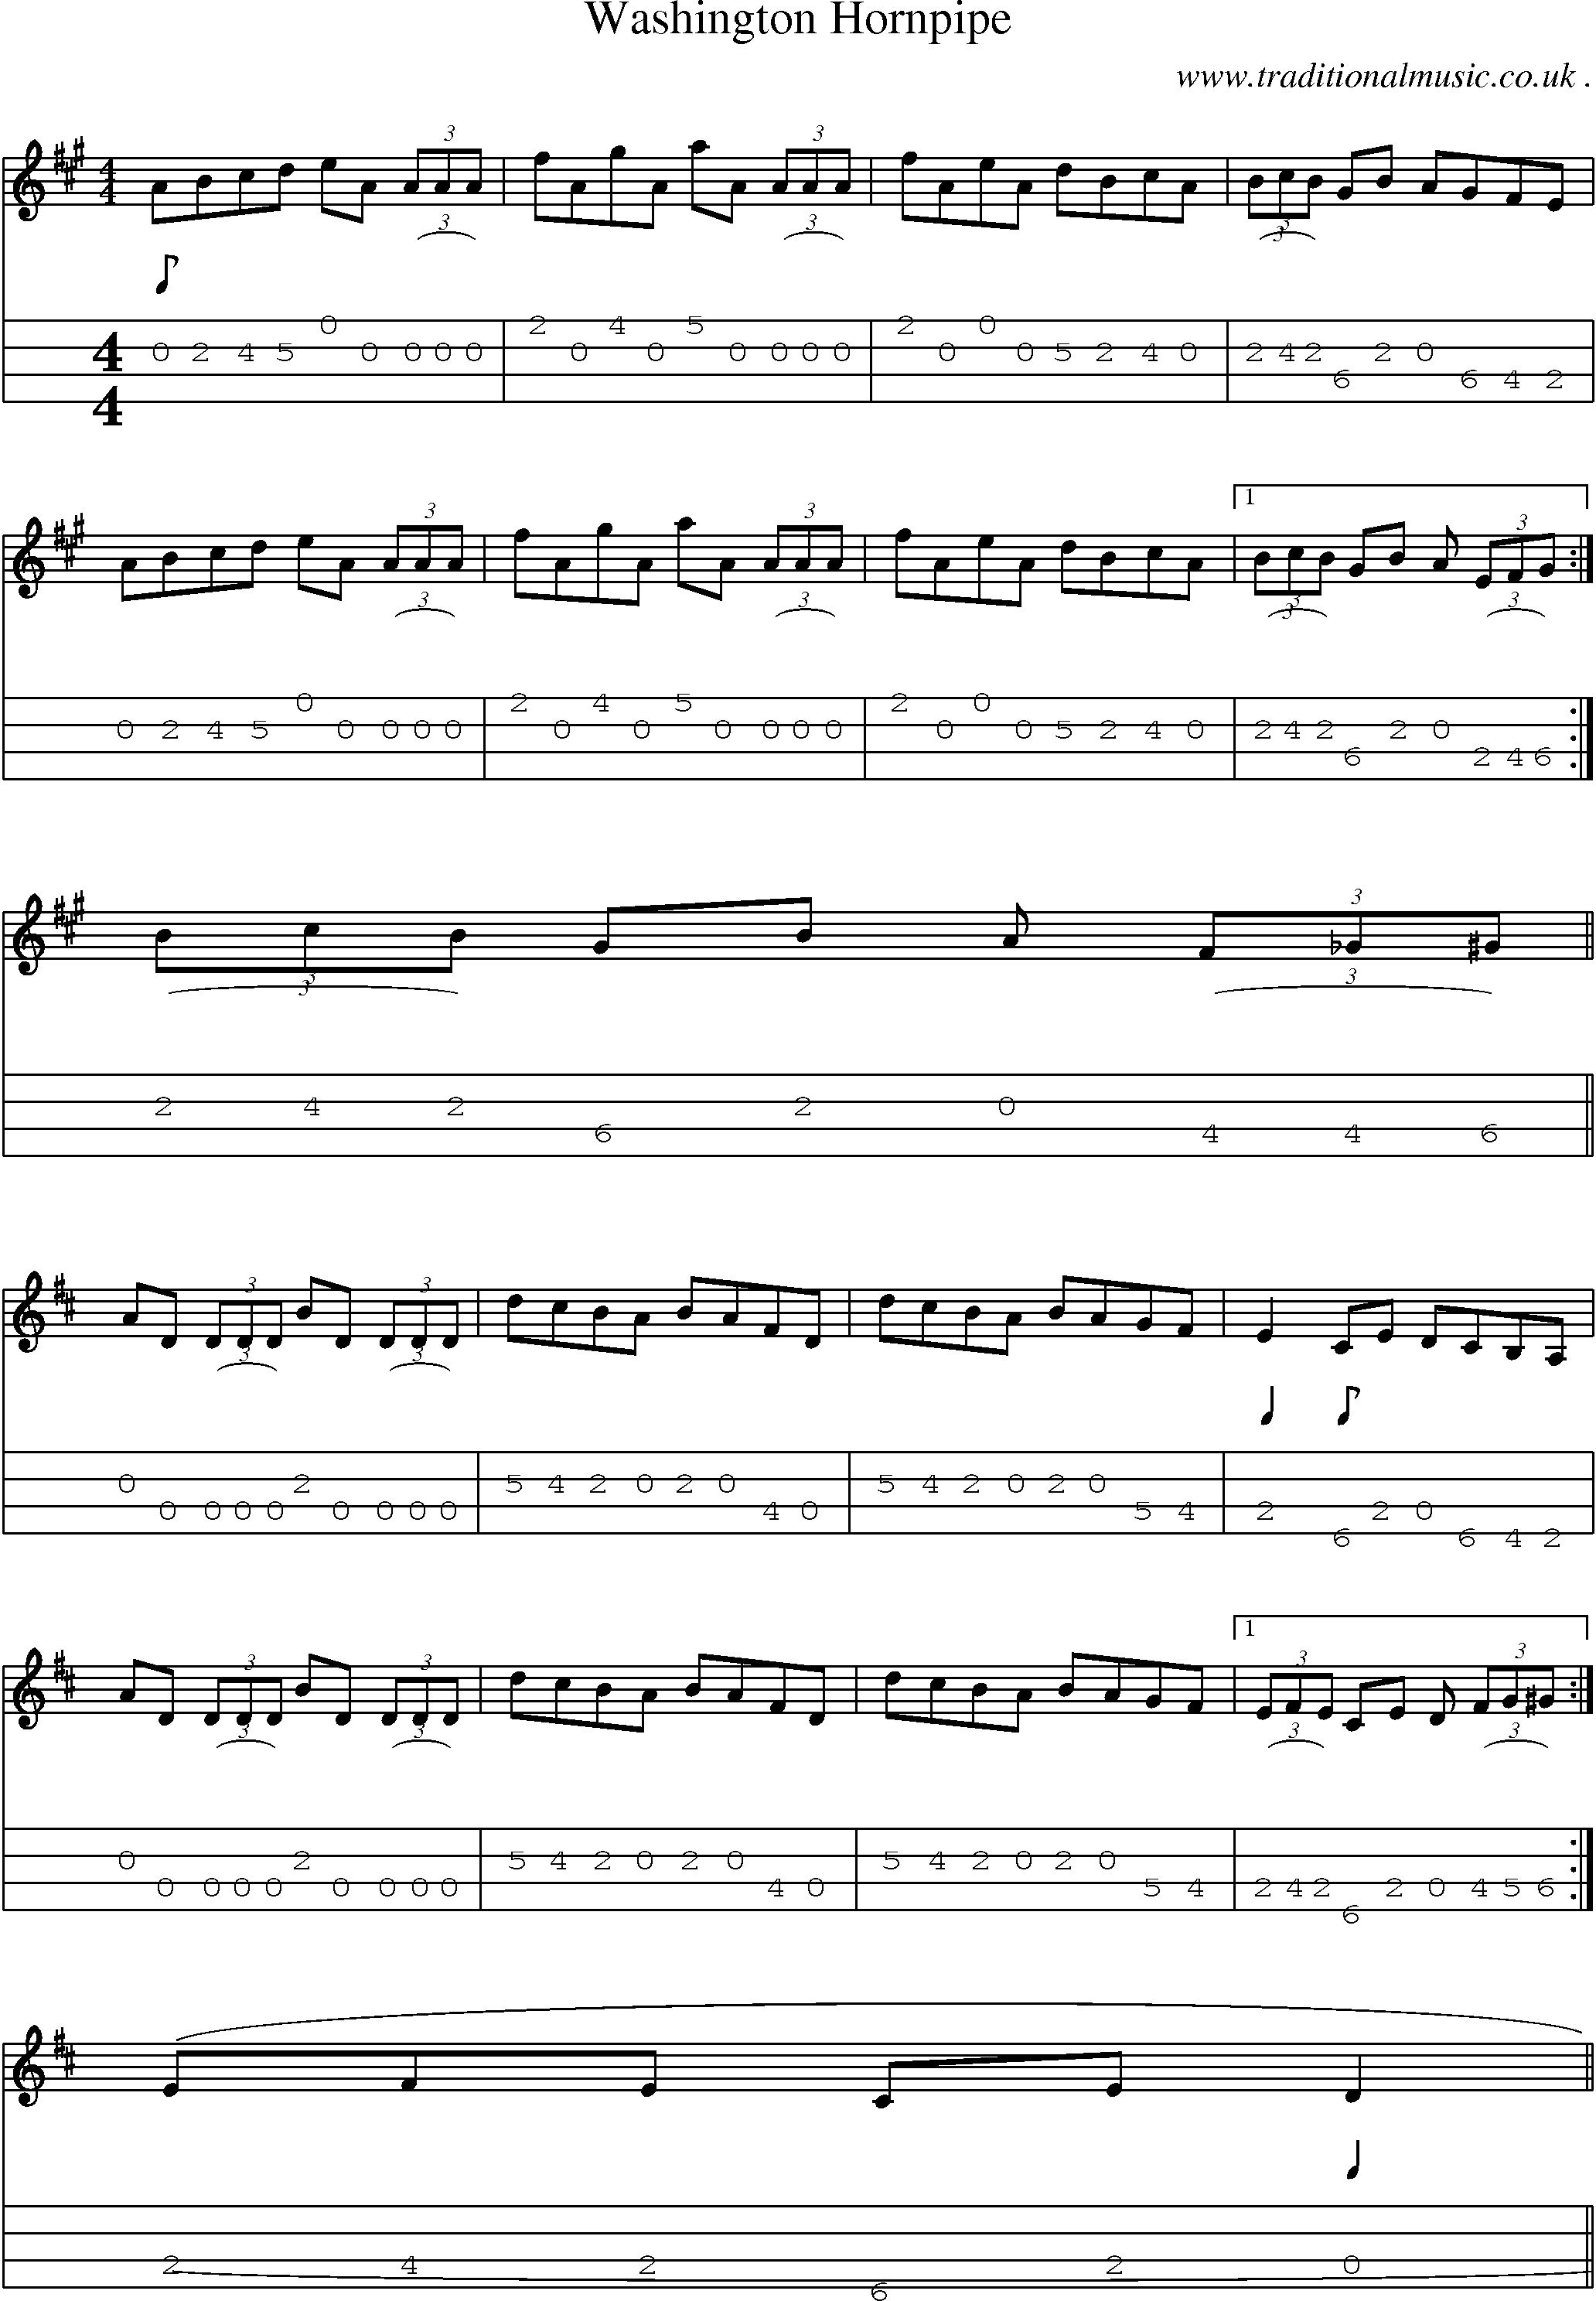 Sheet-Music and Mandolin Tabs for Washington Hornpipe